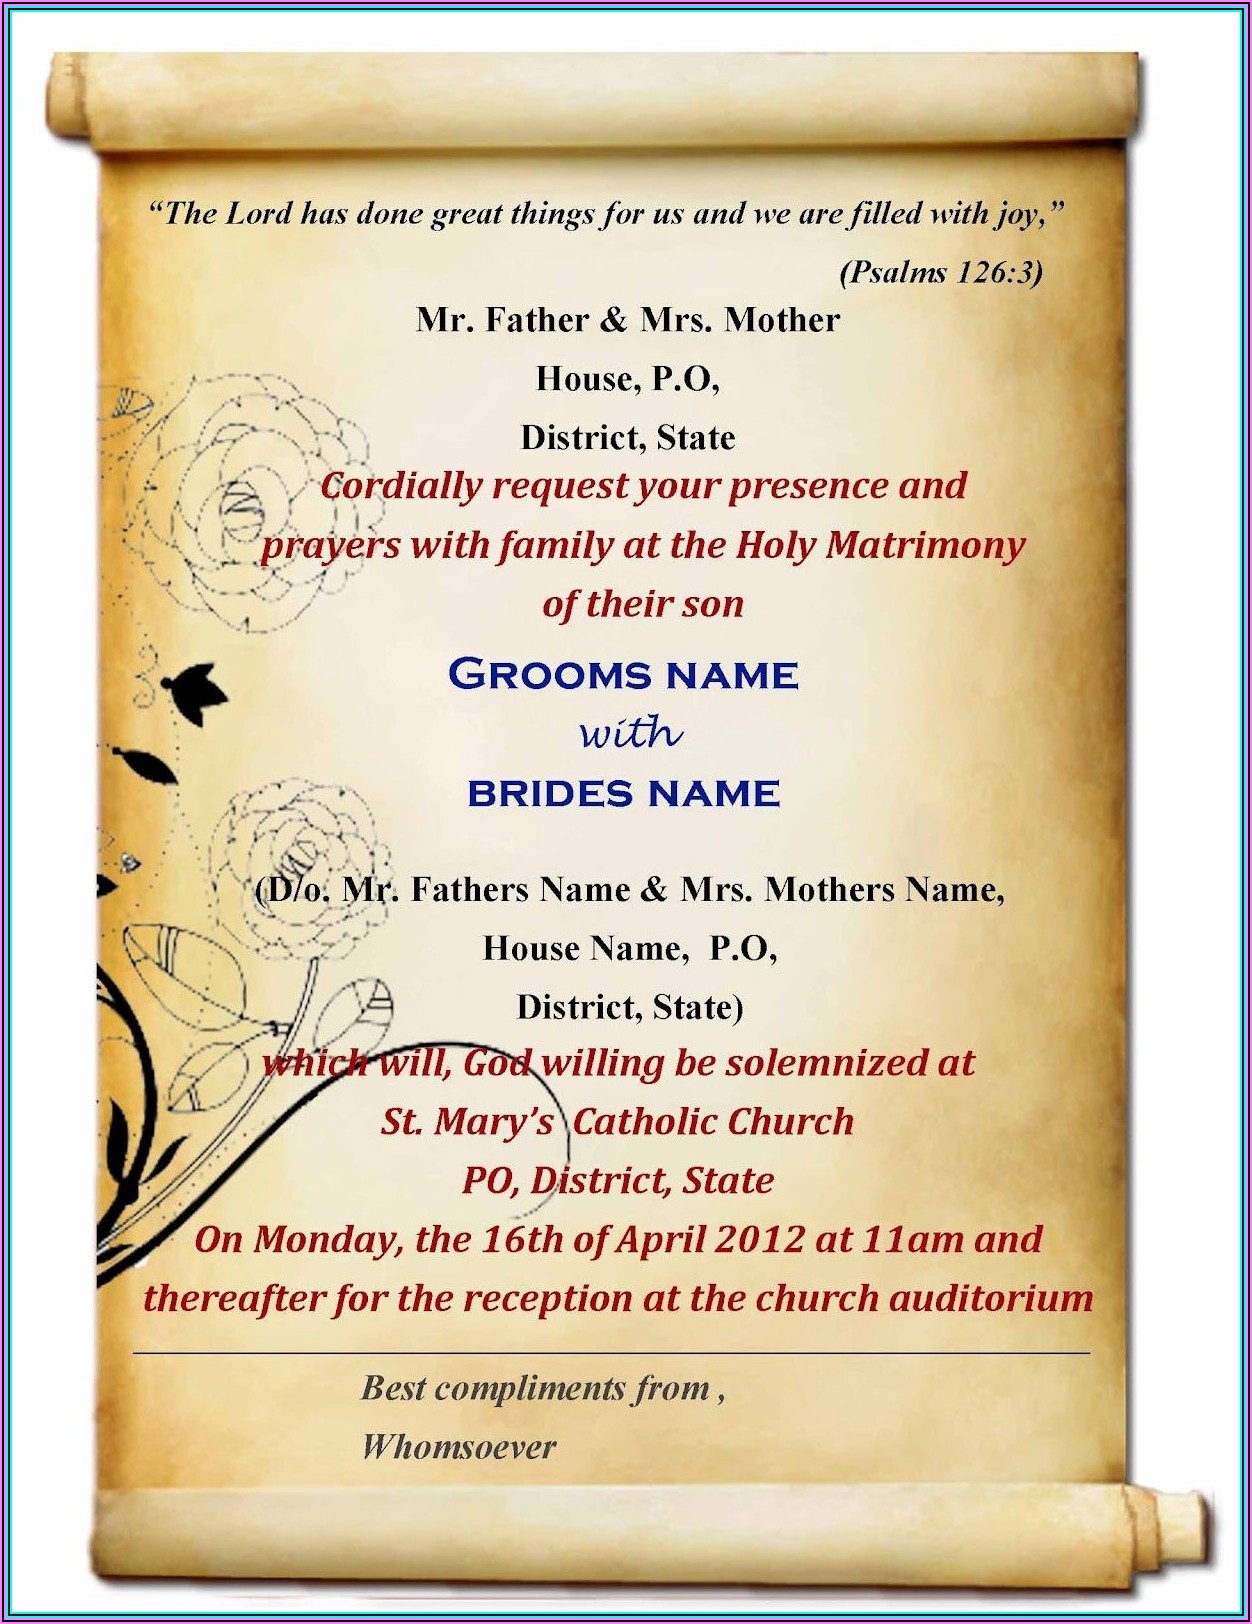 Halloween Wedding Reception Invitation Wording